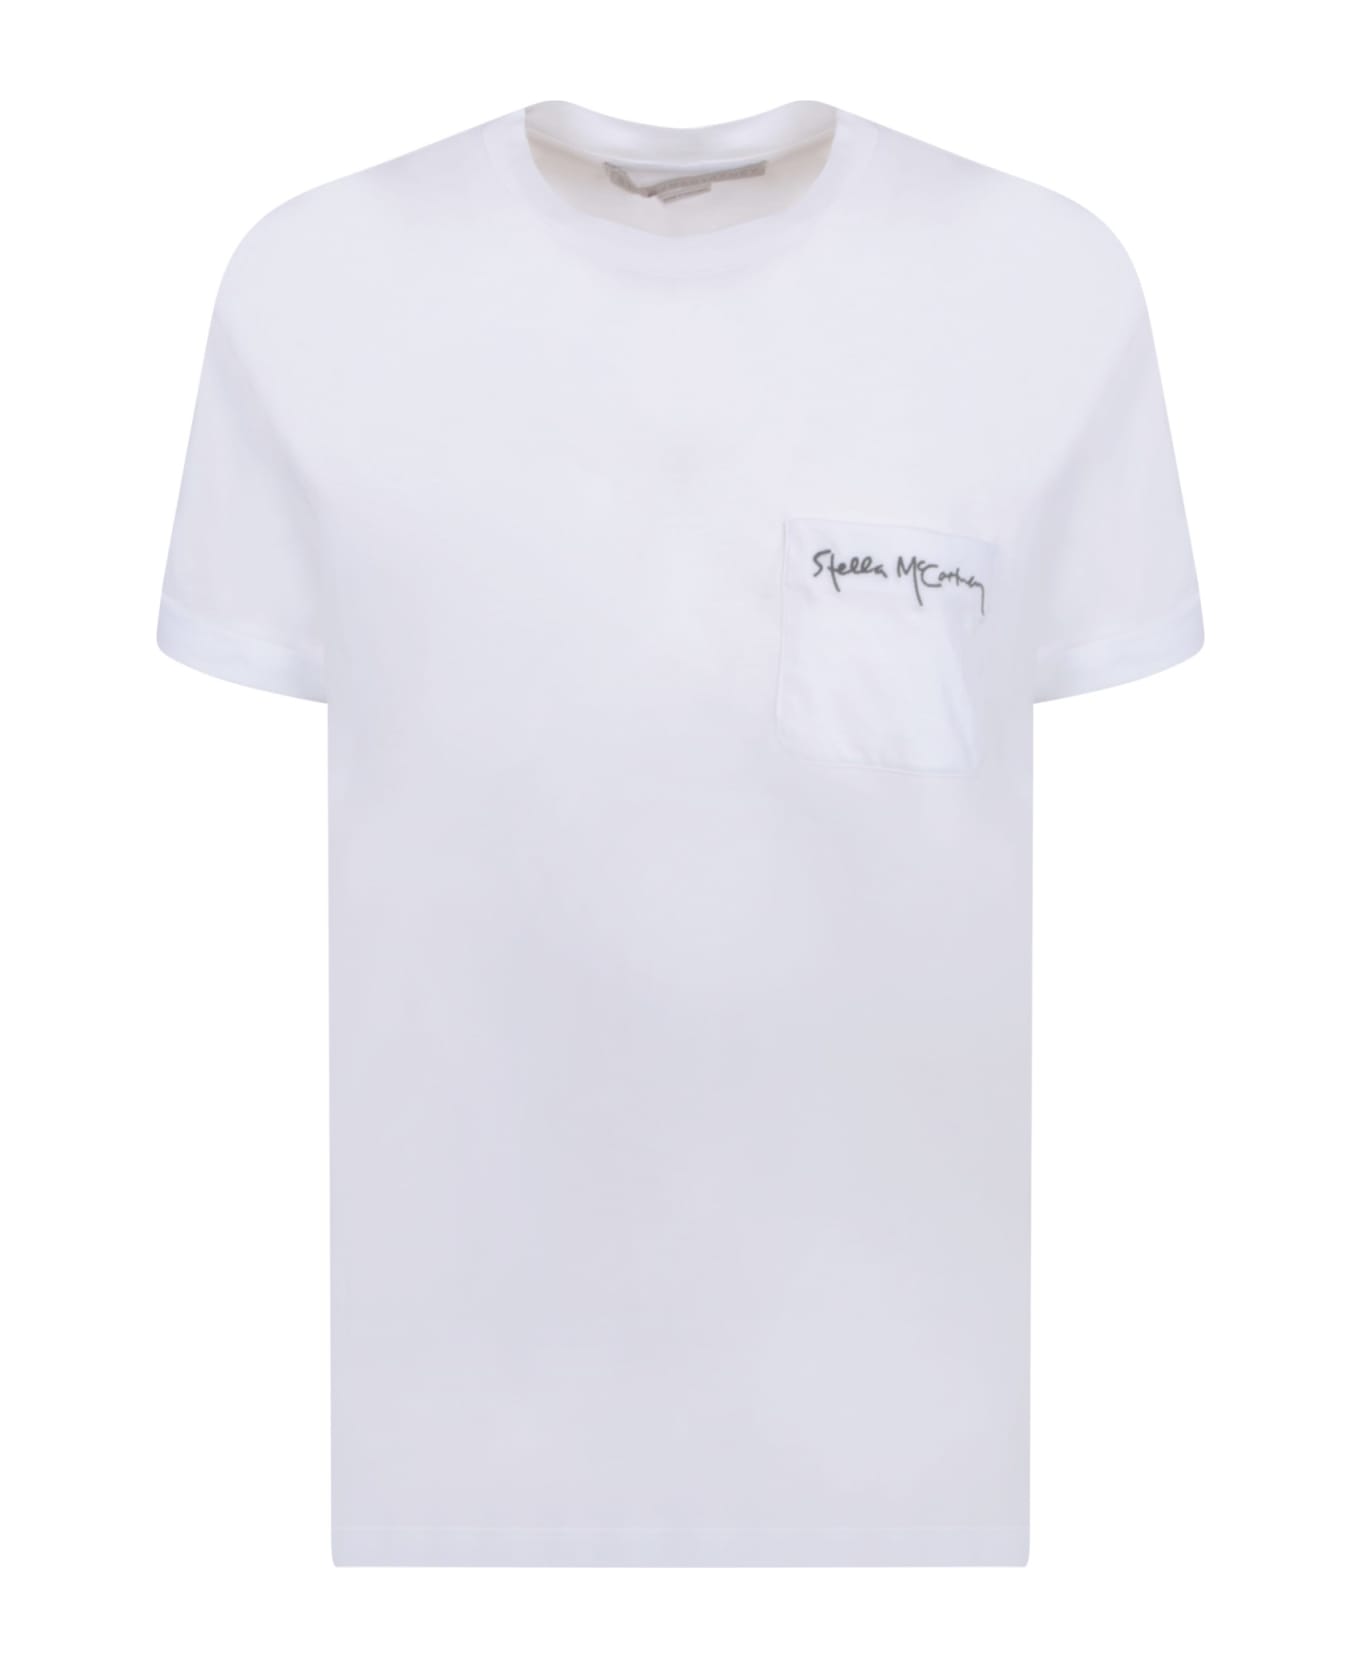 Stella McCartney Chest Embroidery White T-shirt - White